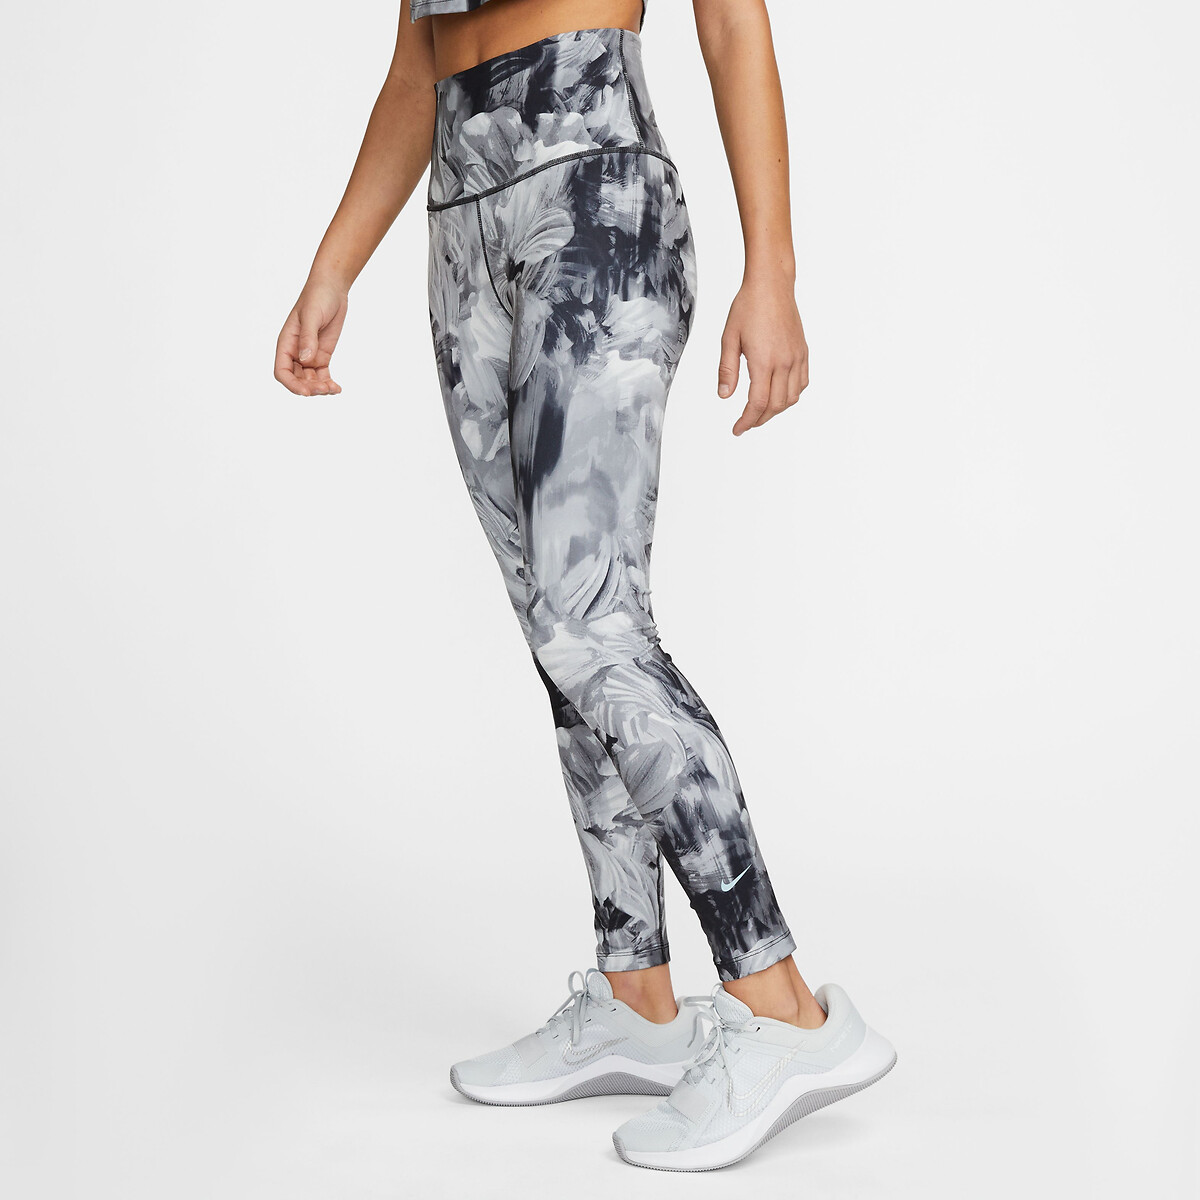 One cropped sports leggings in floral print, black/grey, Nike